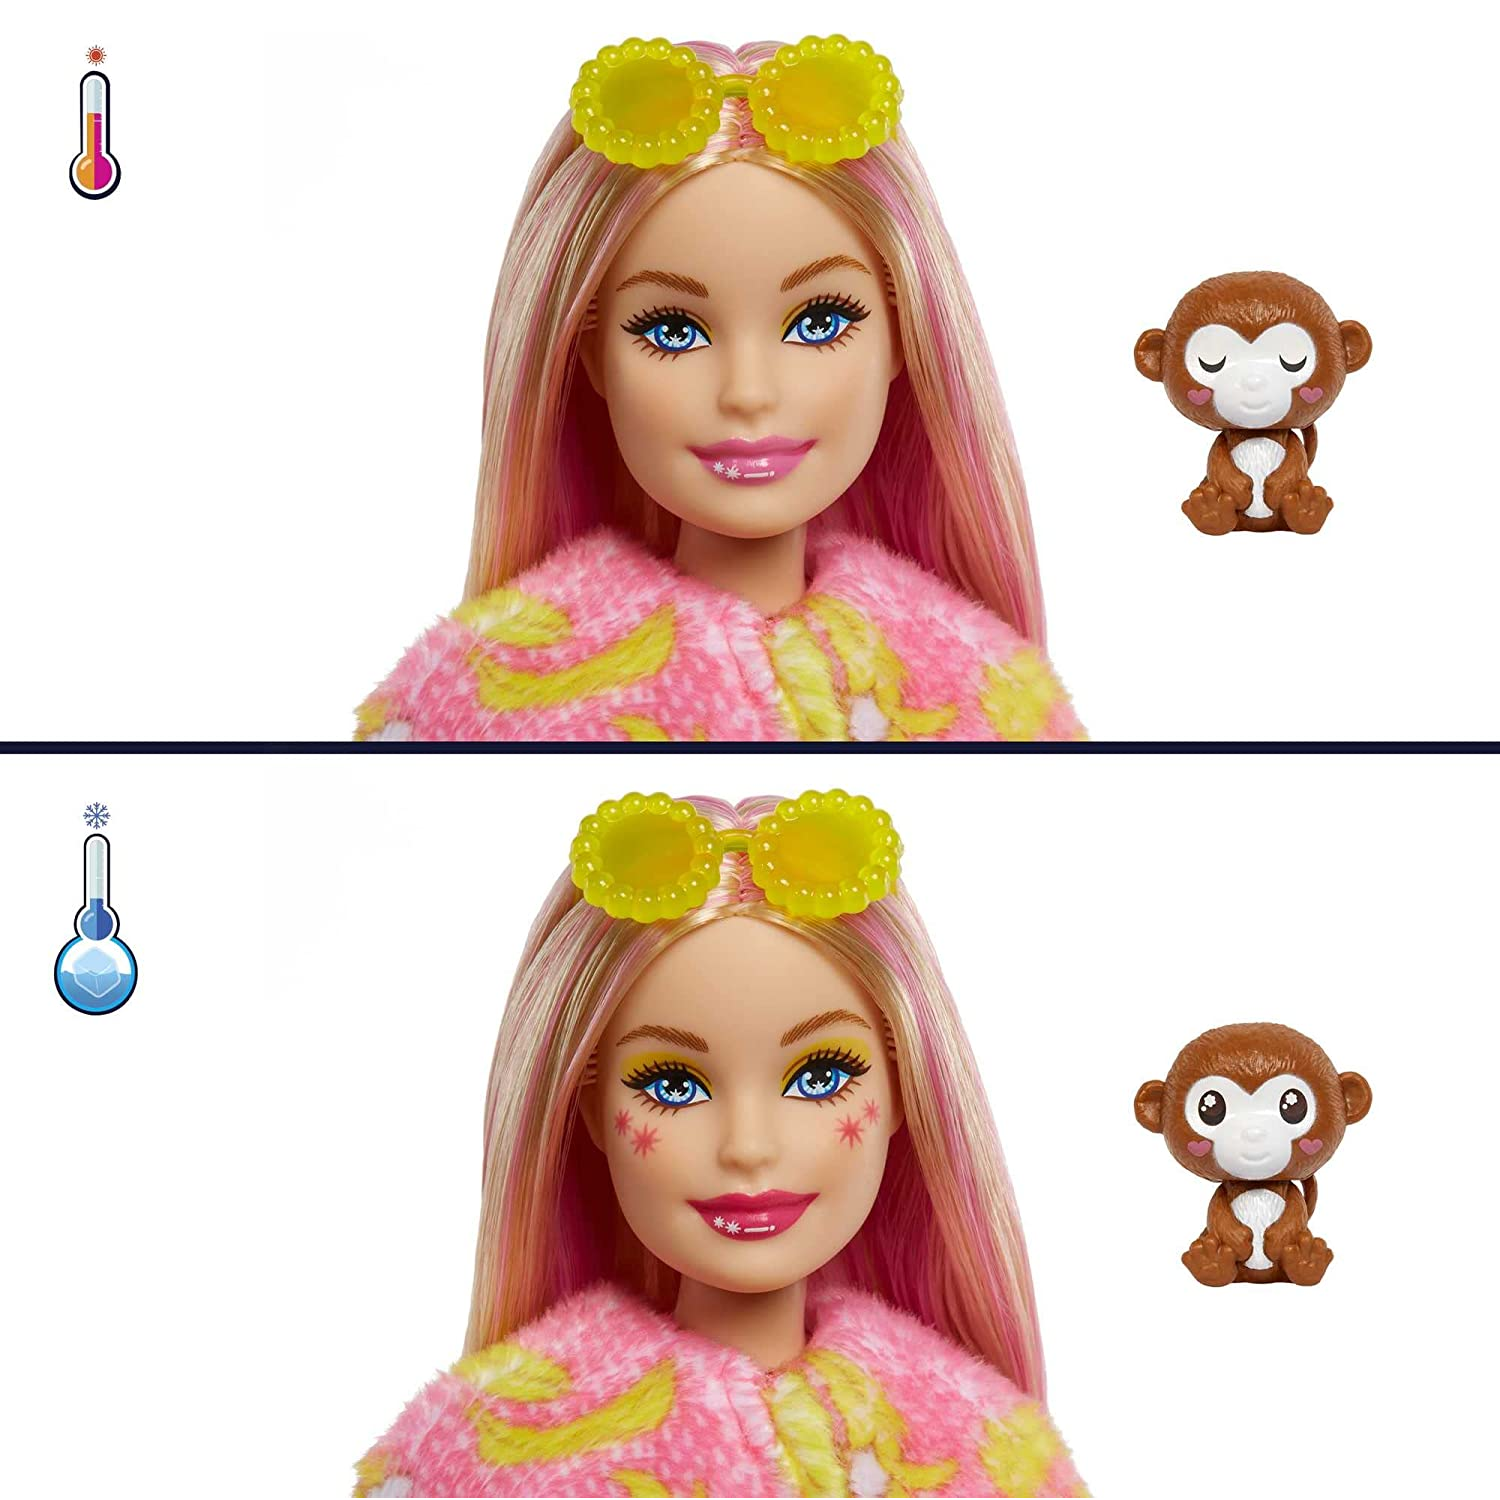 Boneca Barbie Profissoes - Carreira Surpresa - 8 Surpresas - Mattel MATTEL